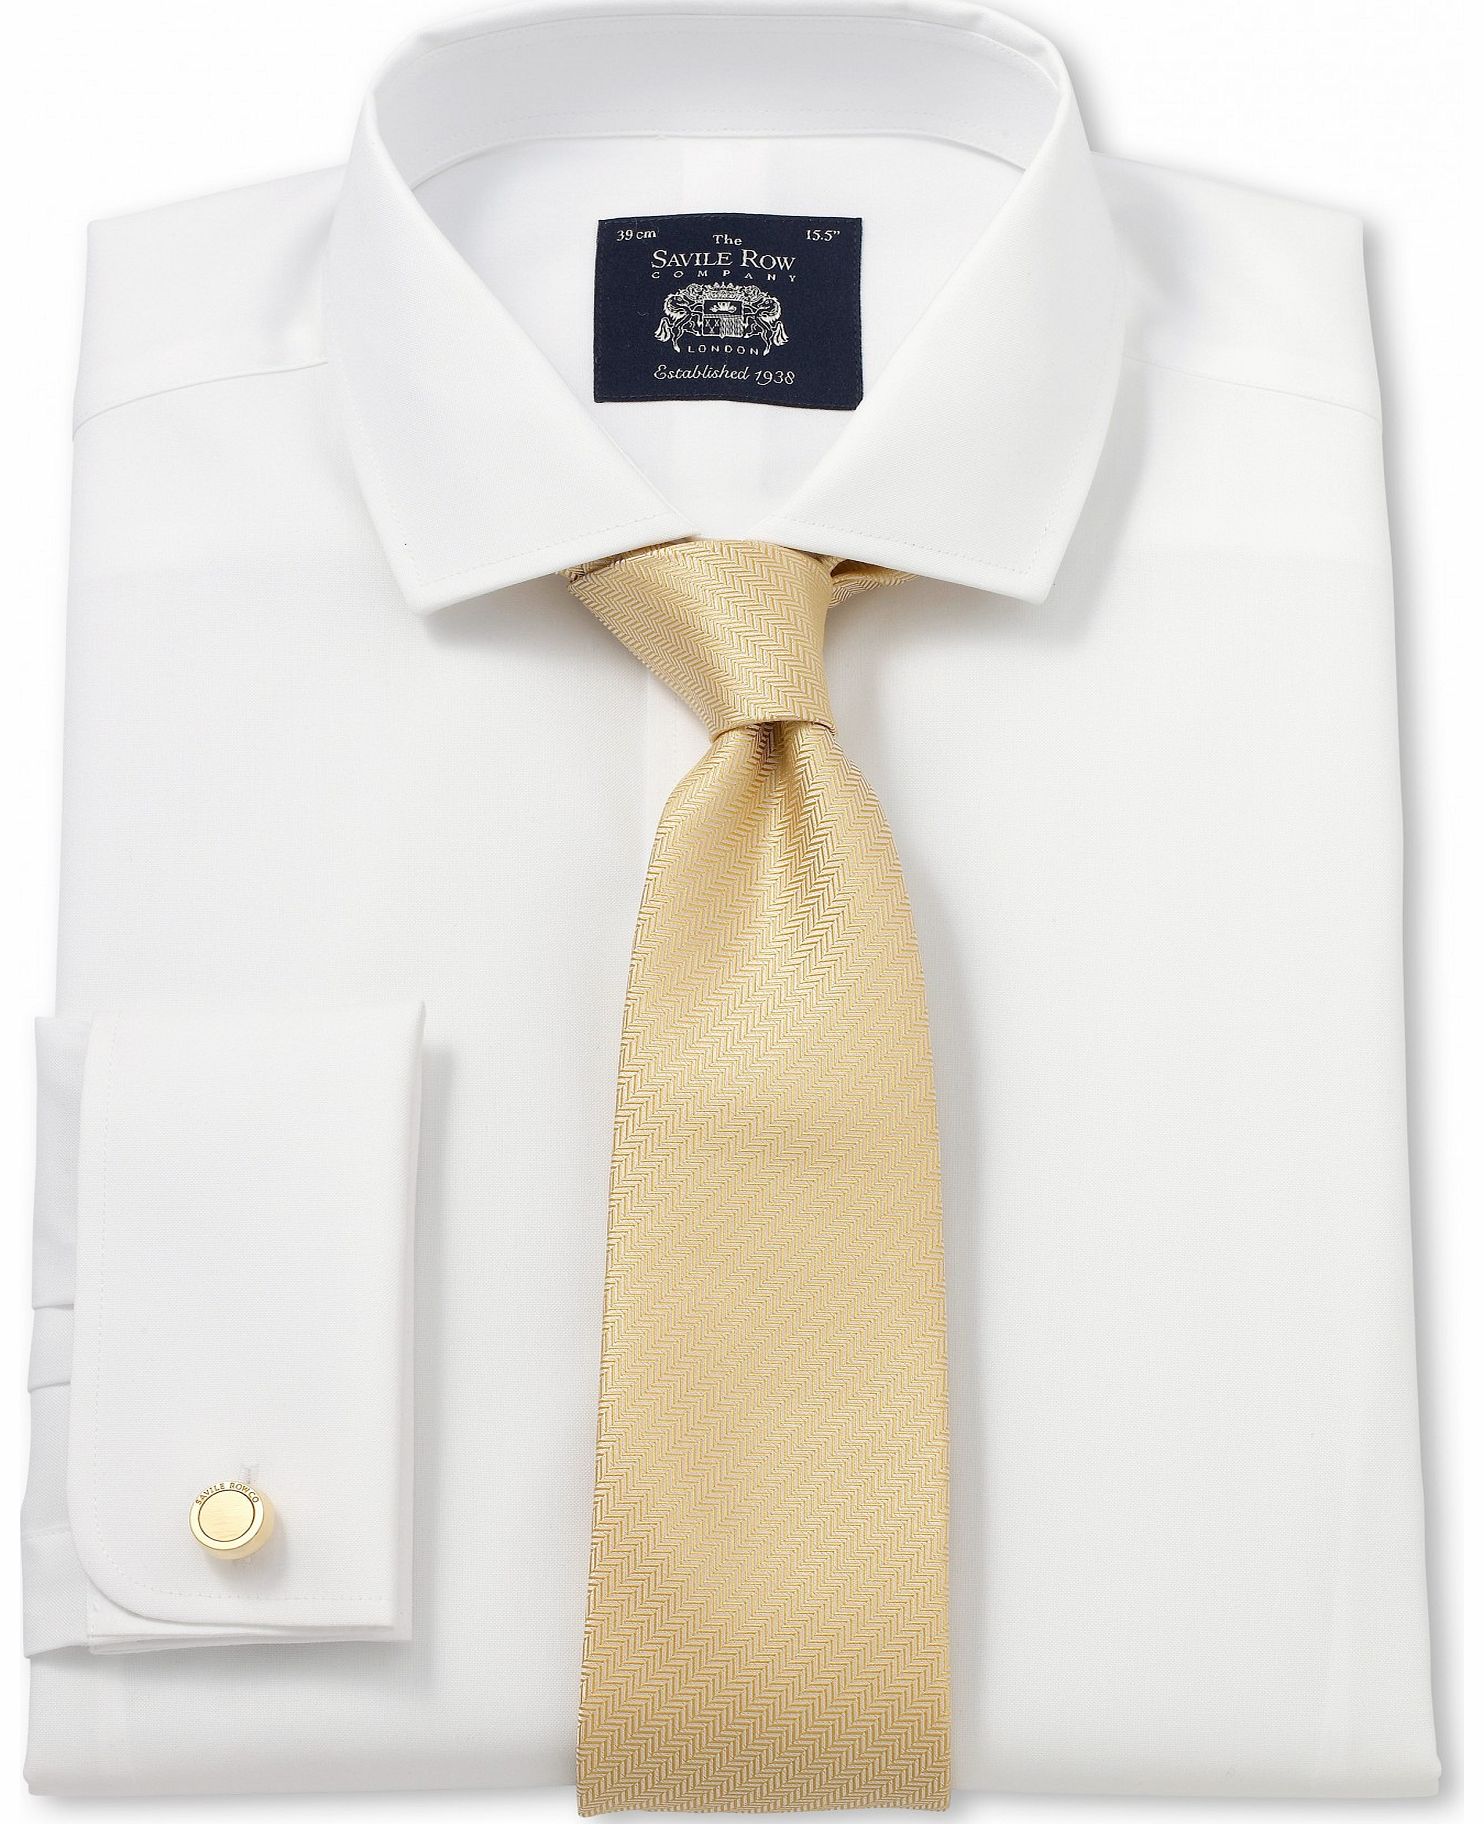 Savile Row Company White Poplin Non Iron Extra Slim Fit Shirt 17